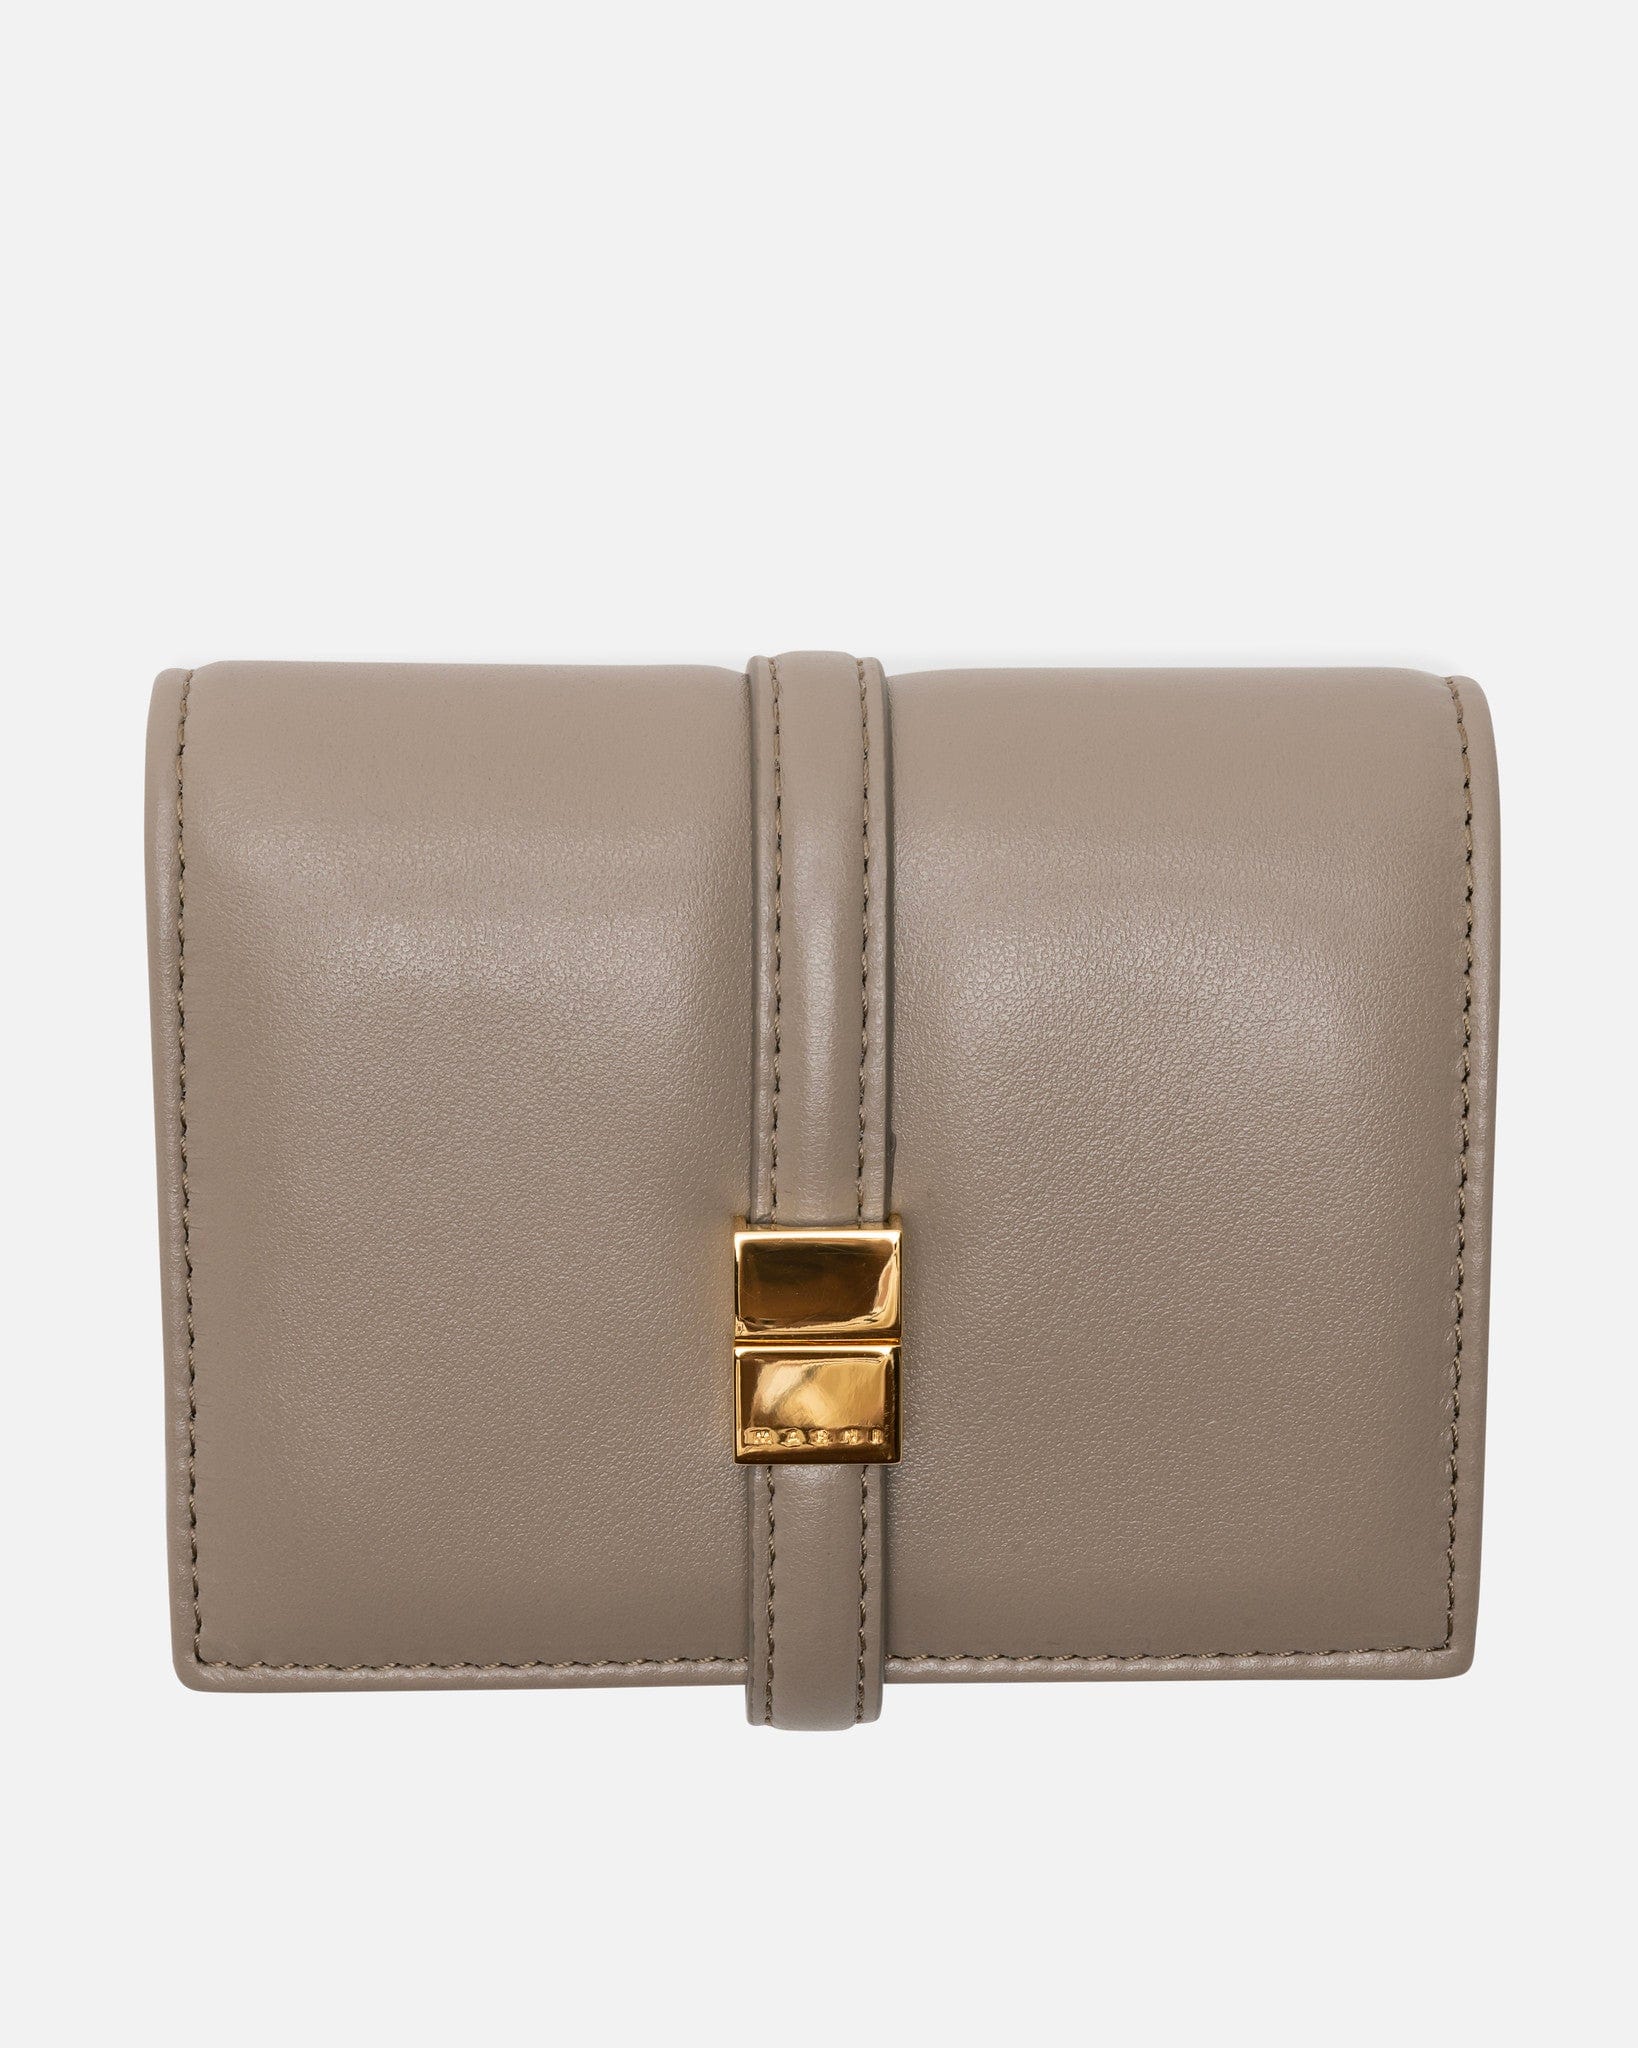 Marni Leather Goods O/S Prisma Billfold Wallet in Cork